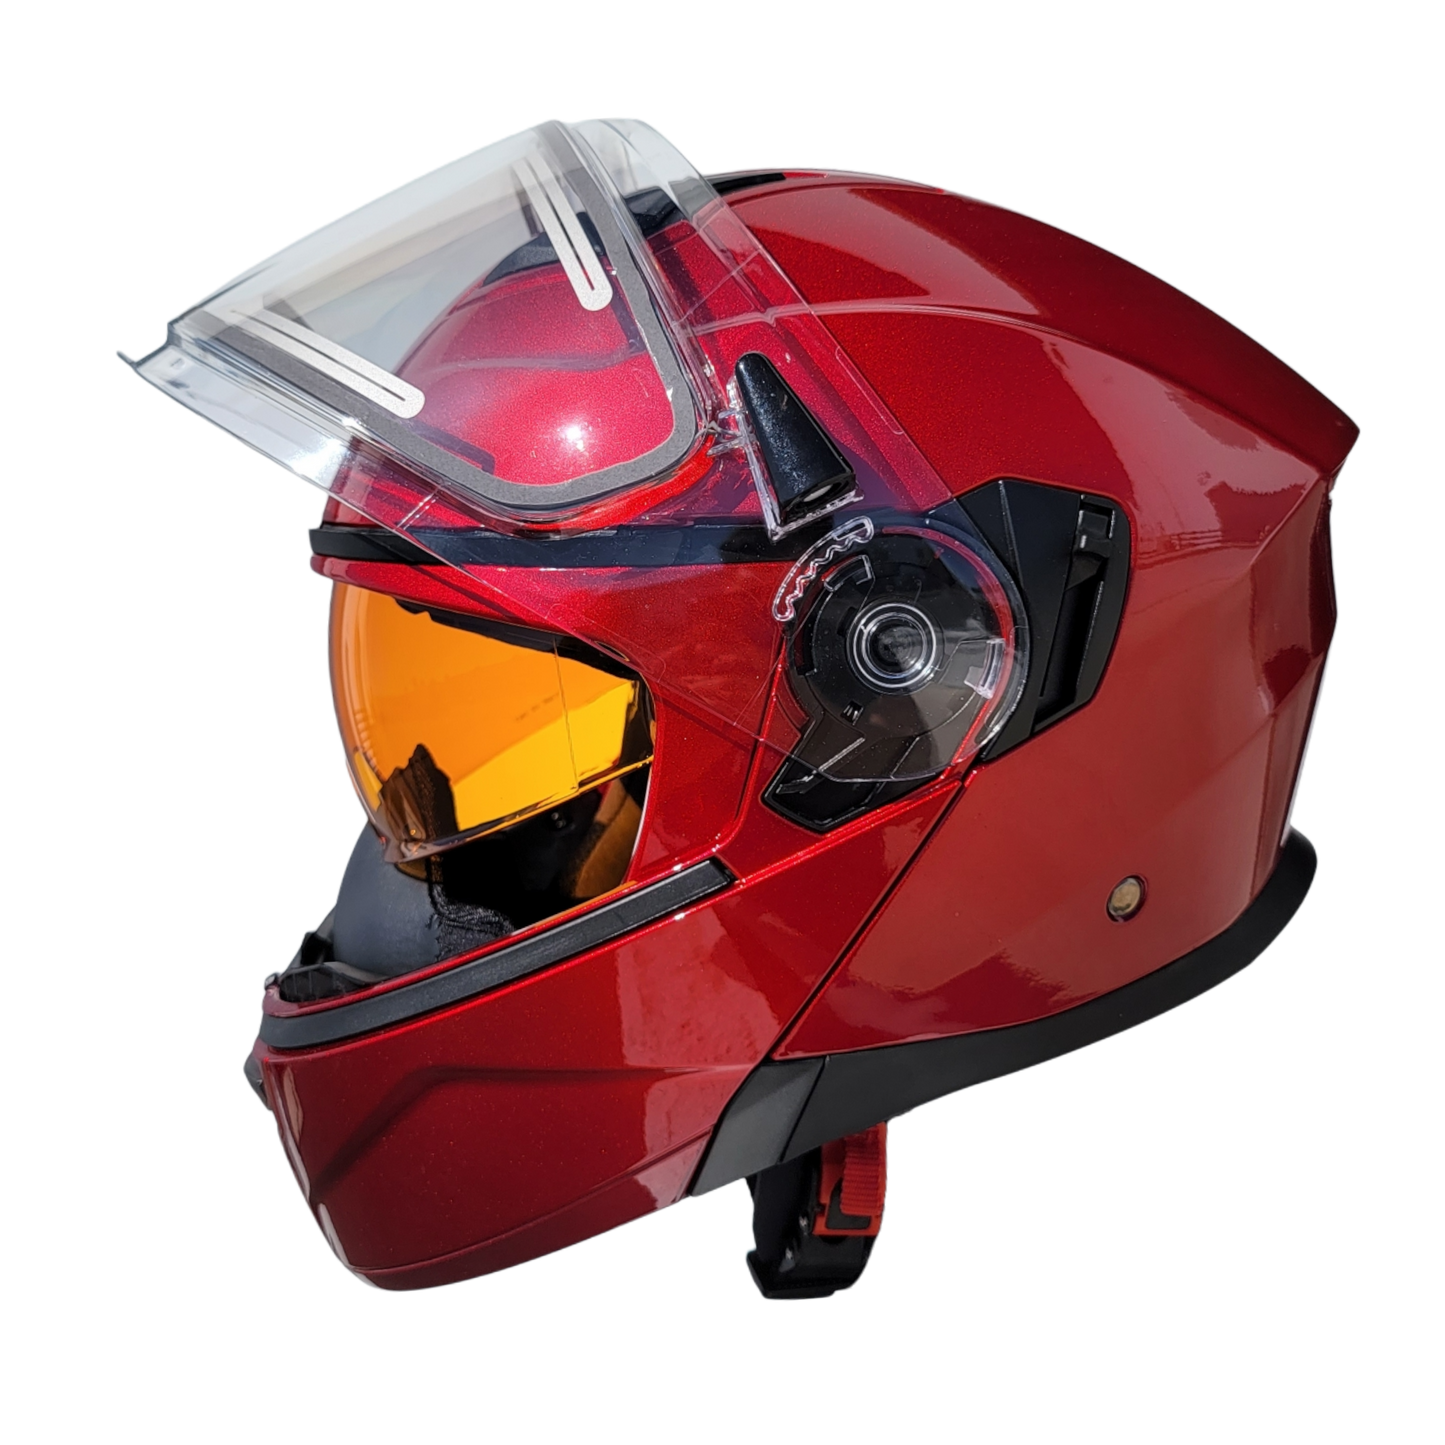 Vega Caldera Snowmobile Modular helmet with Electric heated shield & Amber Drop-down inner shield